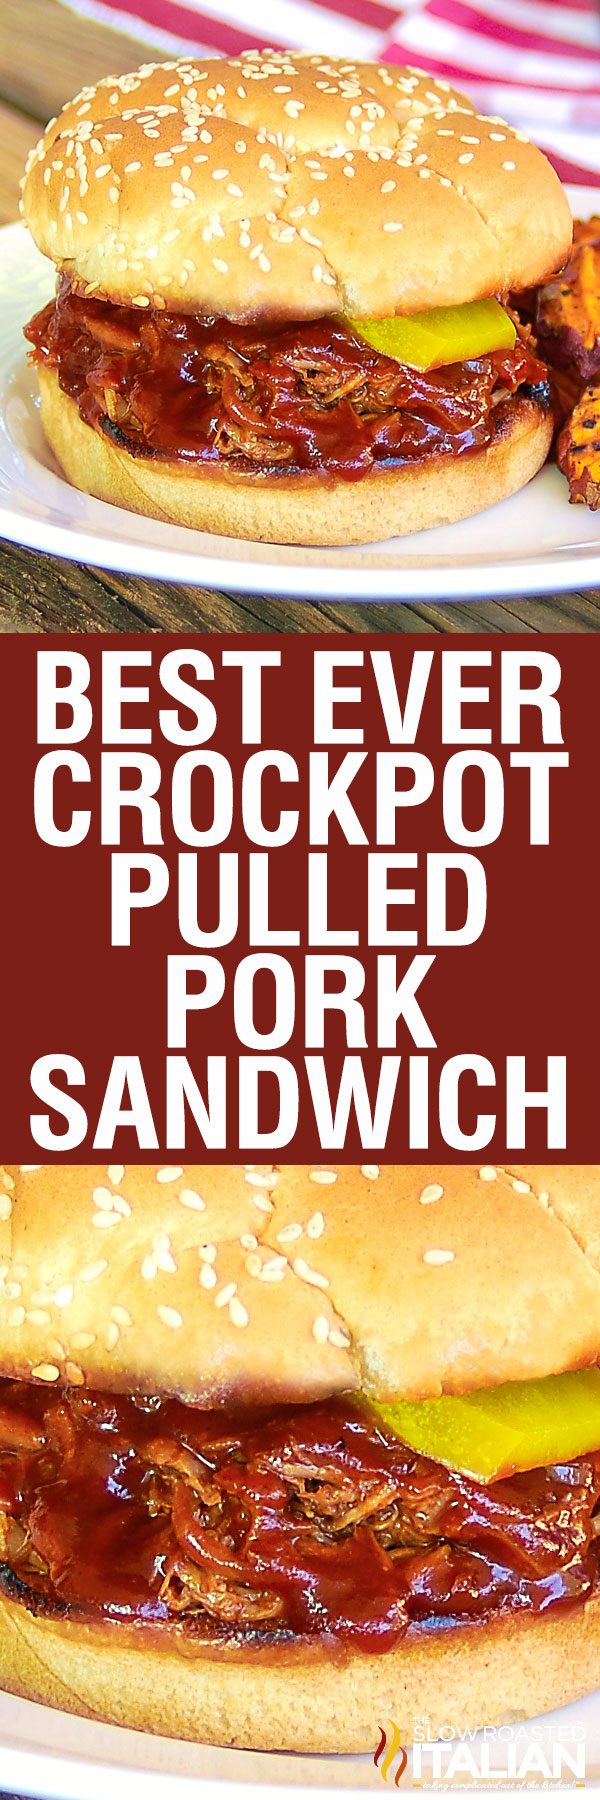 titled pinterest collage for crockpot pulled pork recipe